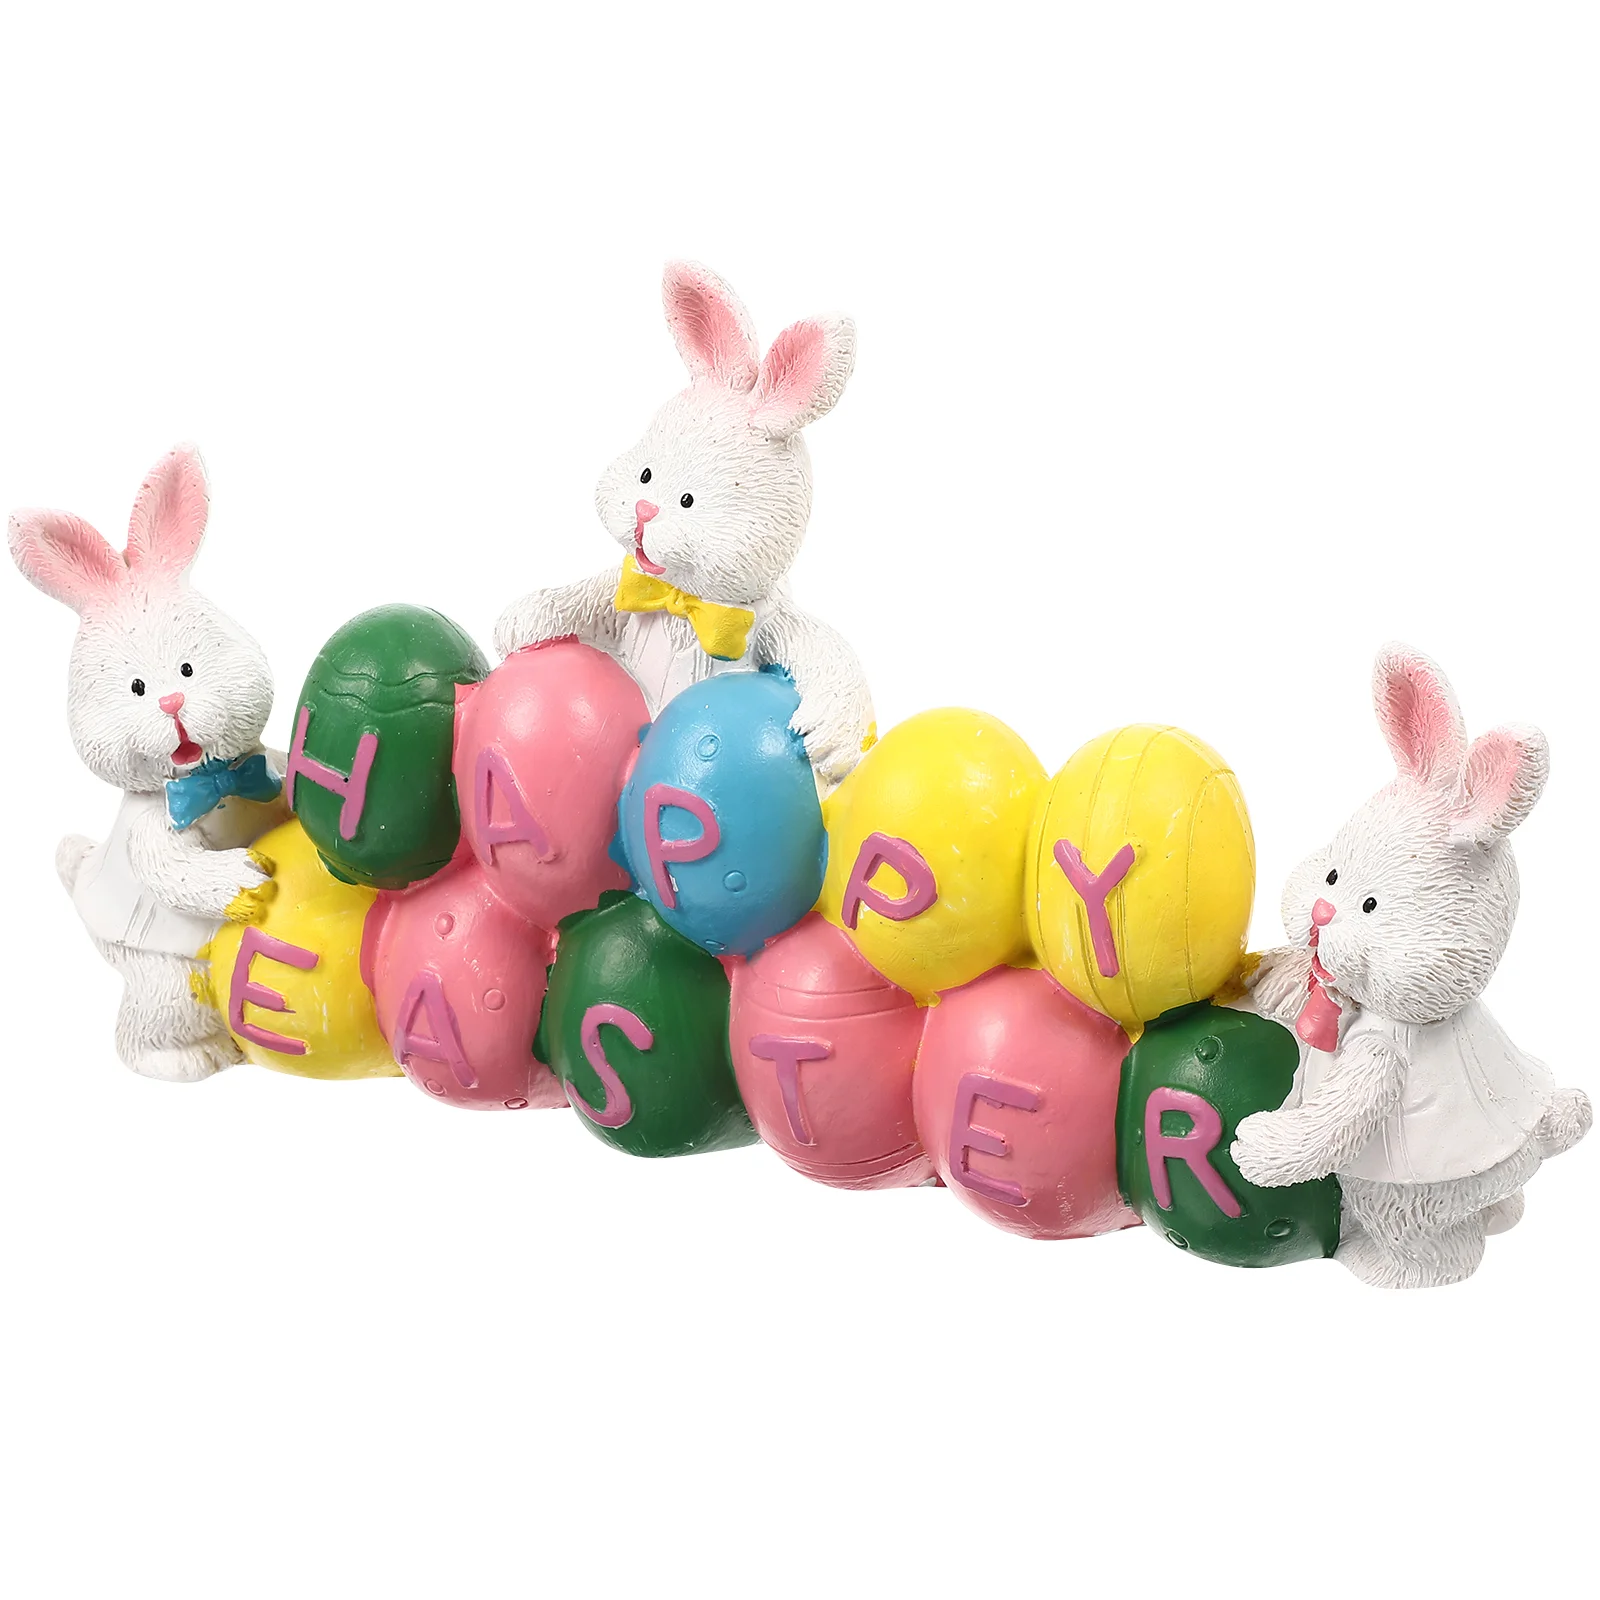 

Easter Bunny Rabbit Decor Centerpiece Tabletop Egg Table Spring Decoration Party Happy Eggs Ornament Sculpture Resin Desktop